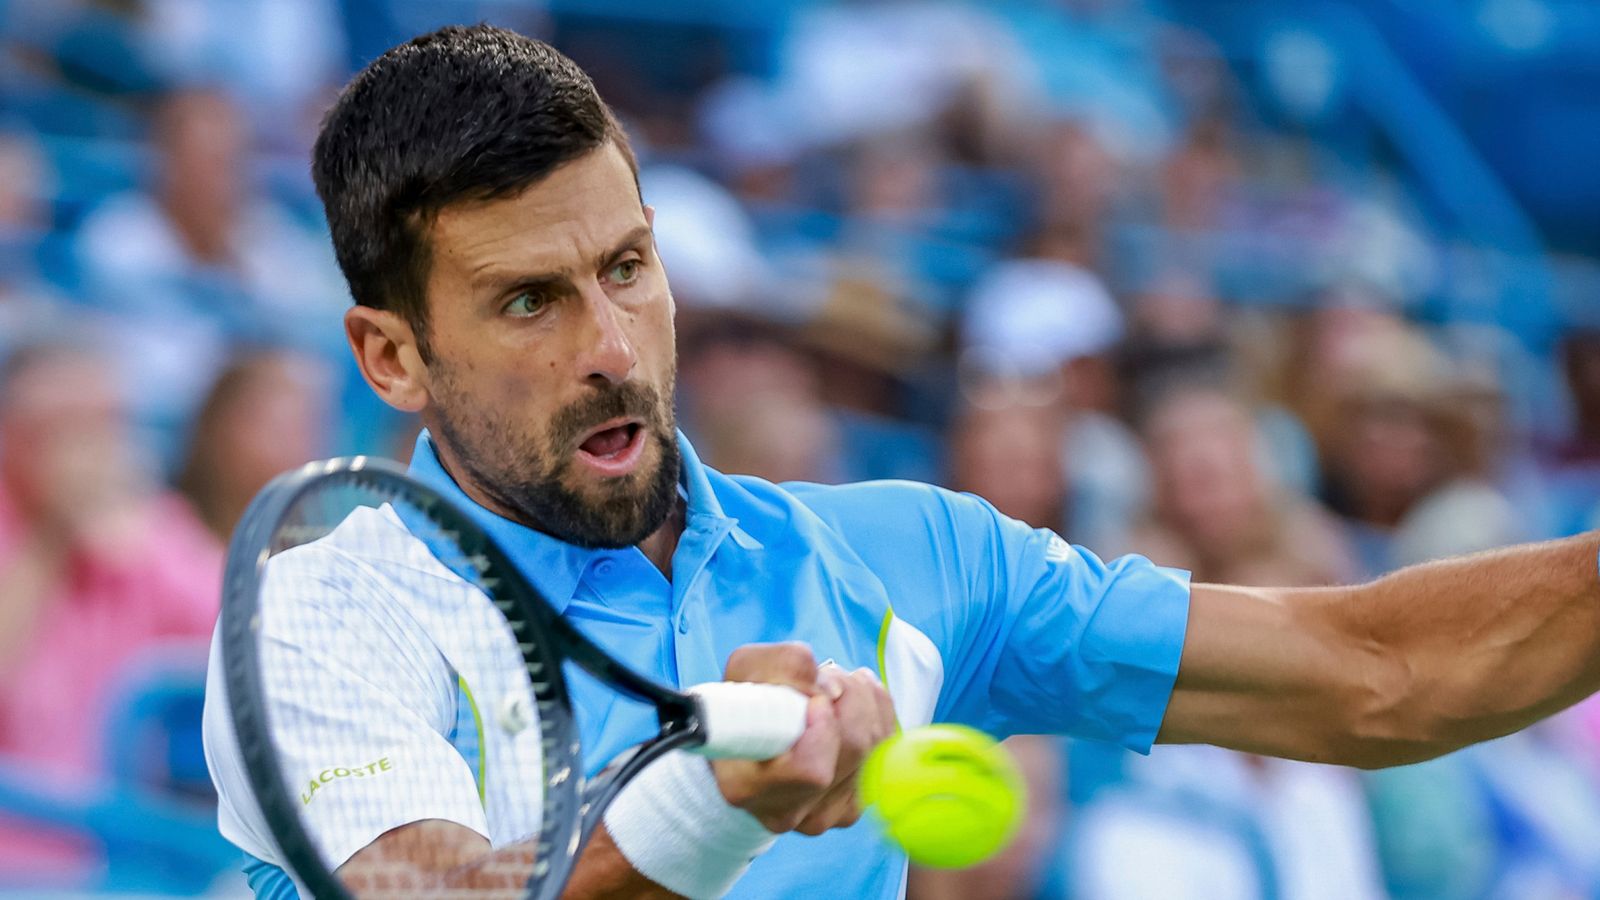 Novak Djokovic wins on his US return at Cincinnati Open after twoyear